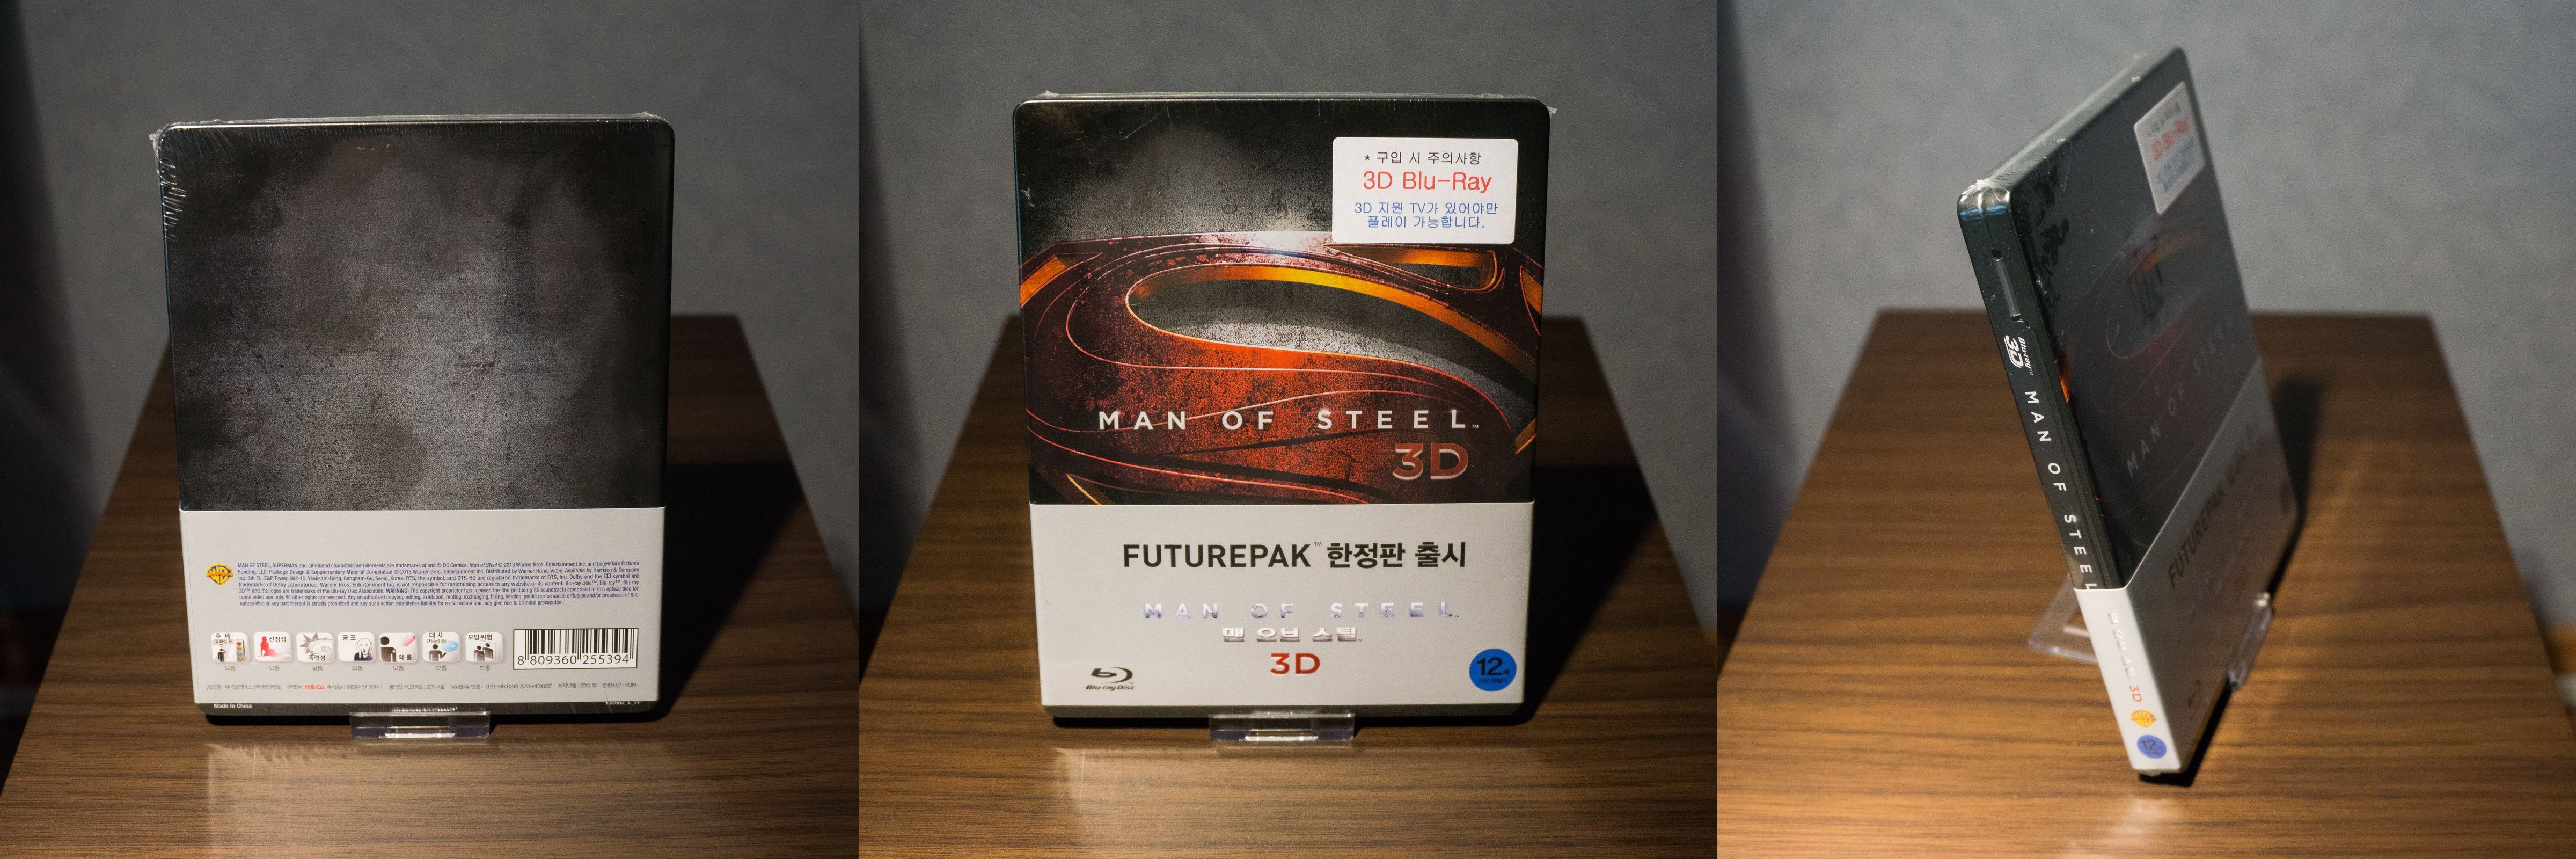 Man of Steel Futurepak Korea